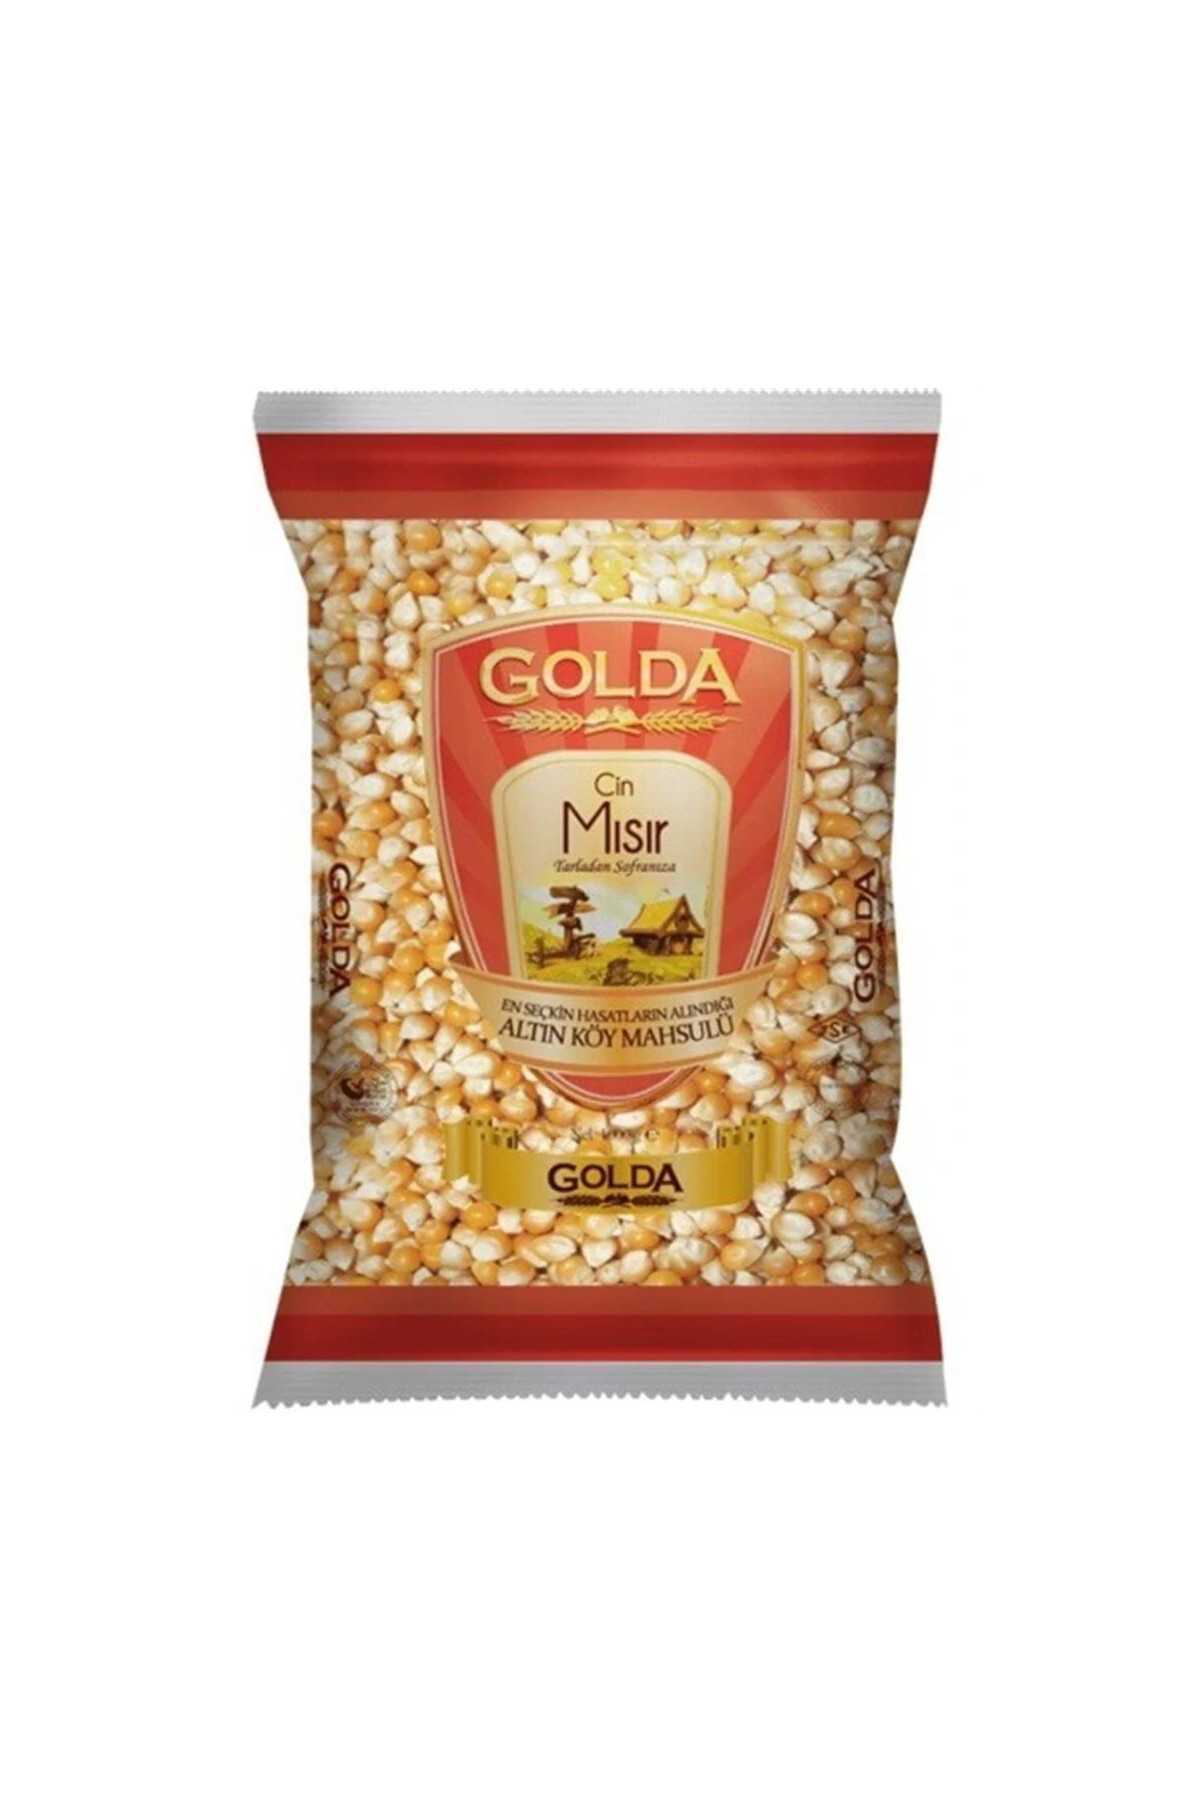 Golda Cin Mısır (Popcorn) 1 KG x 12 Adet (Koli)